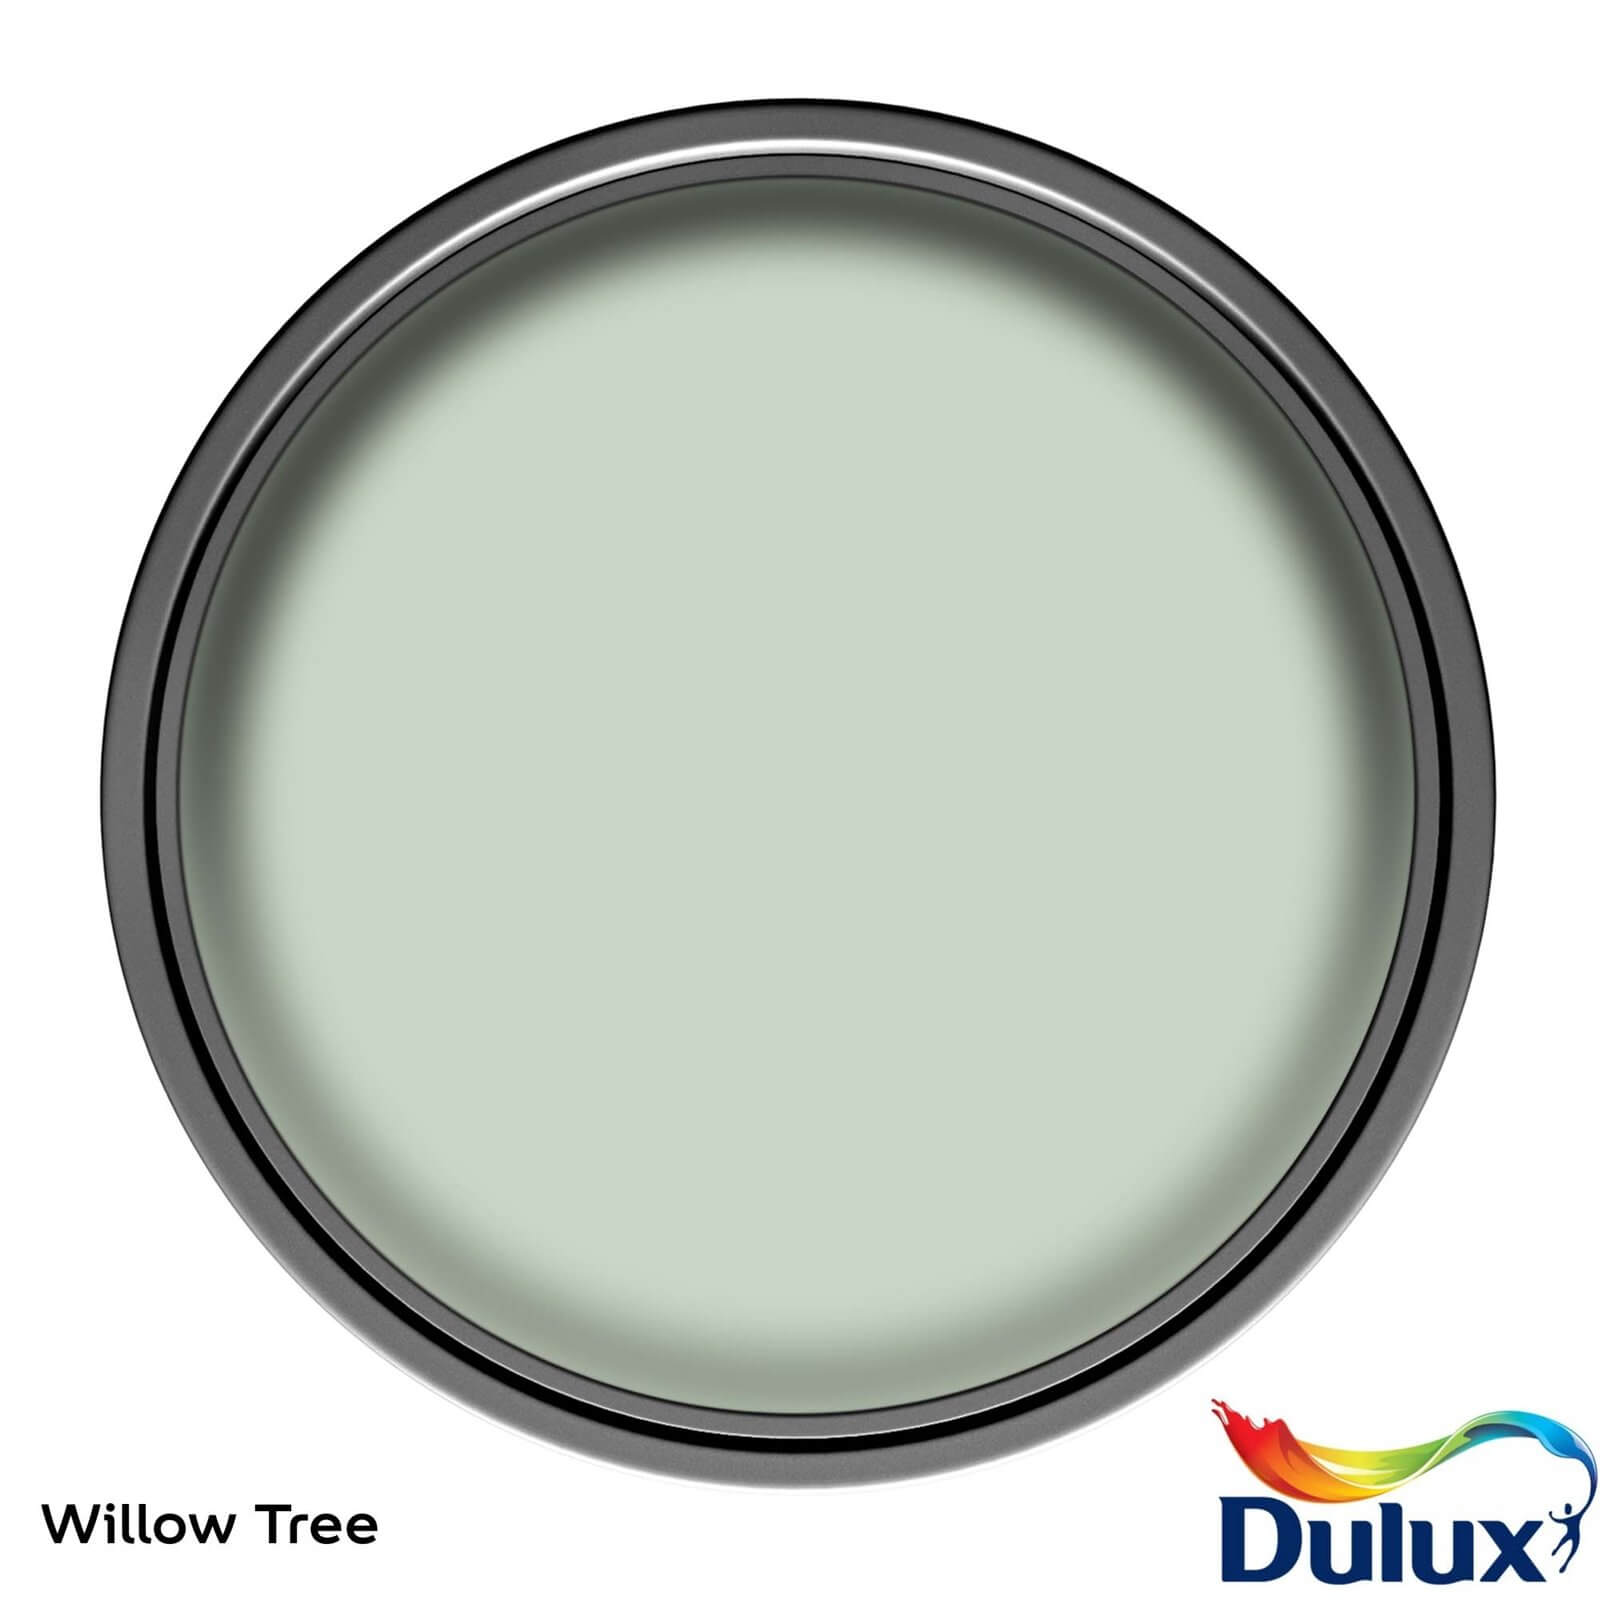 Dulux Easycare Kitchen Matt Emulsion Paint Willow Tree - 2.5L